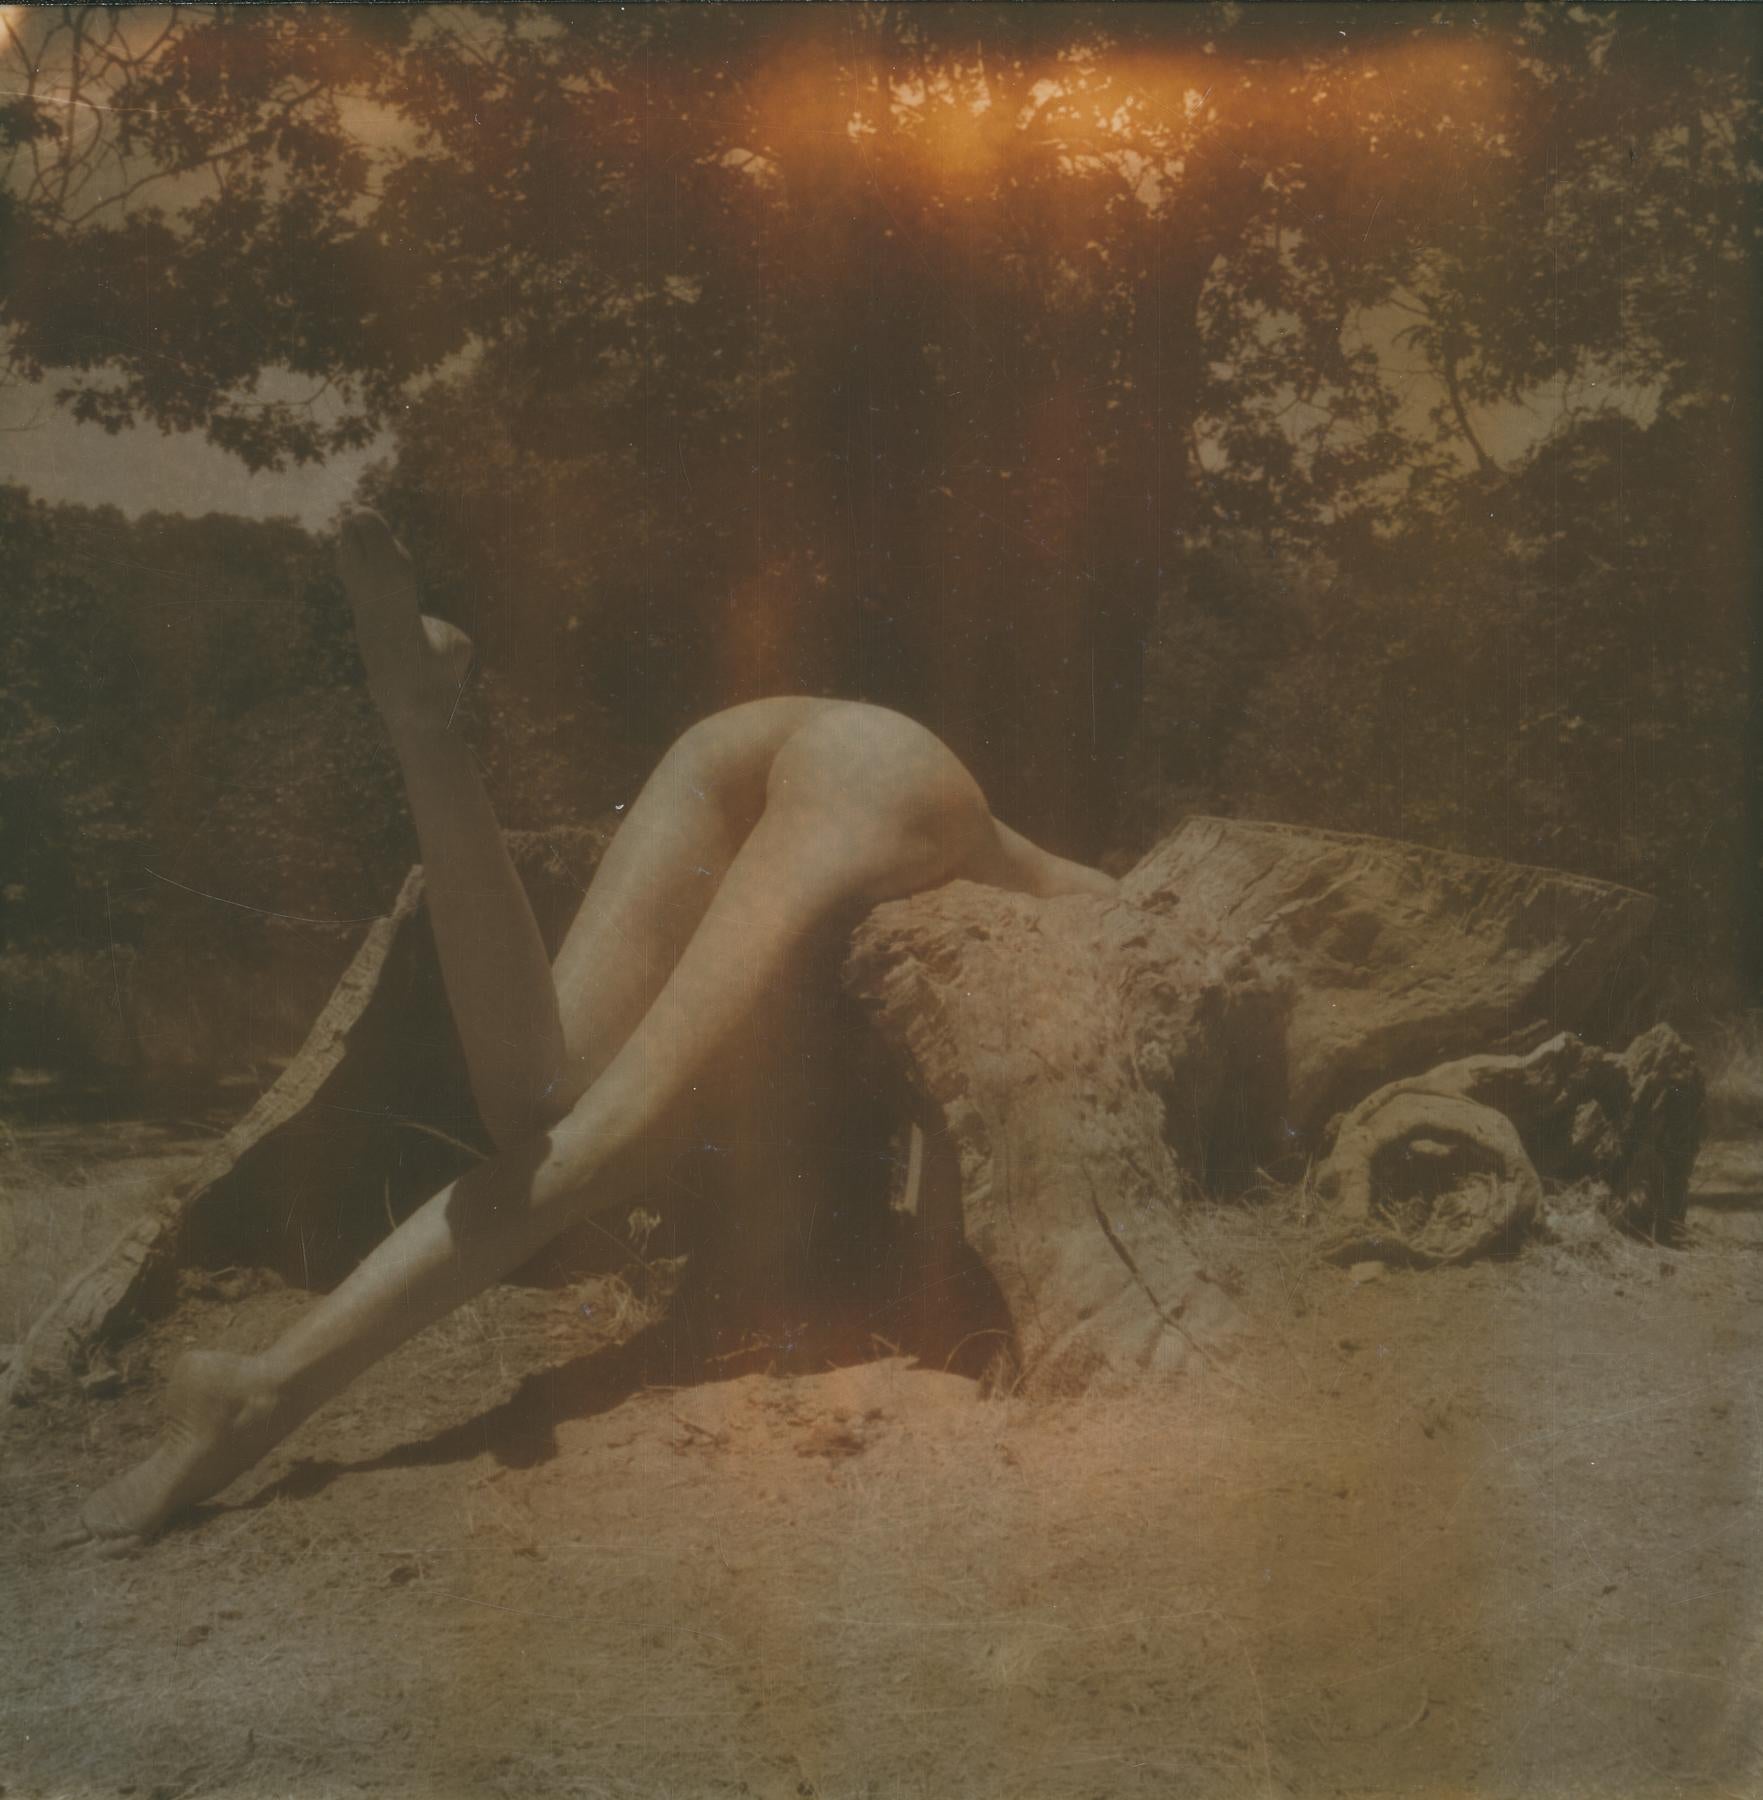 Kirsten Thys van den Audenaerde Color Photograph - The Upside Down - Contemporary, Nude, Women, Polaroid, 21st Century, Color